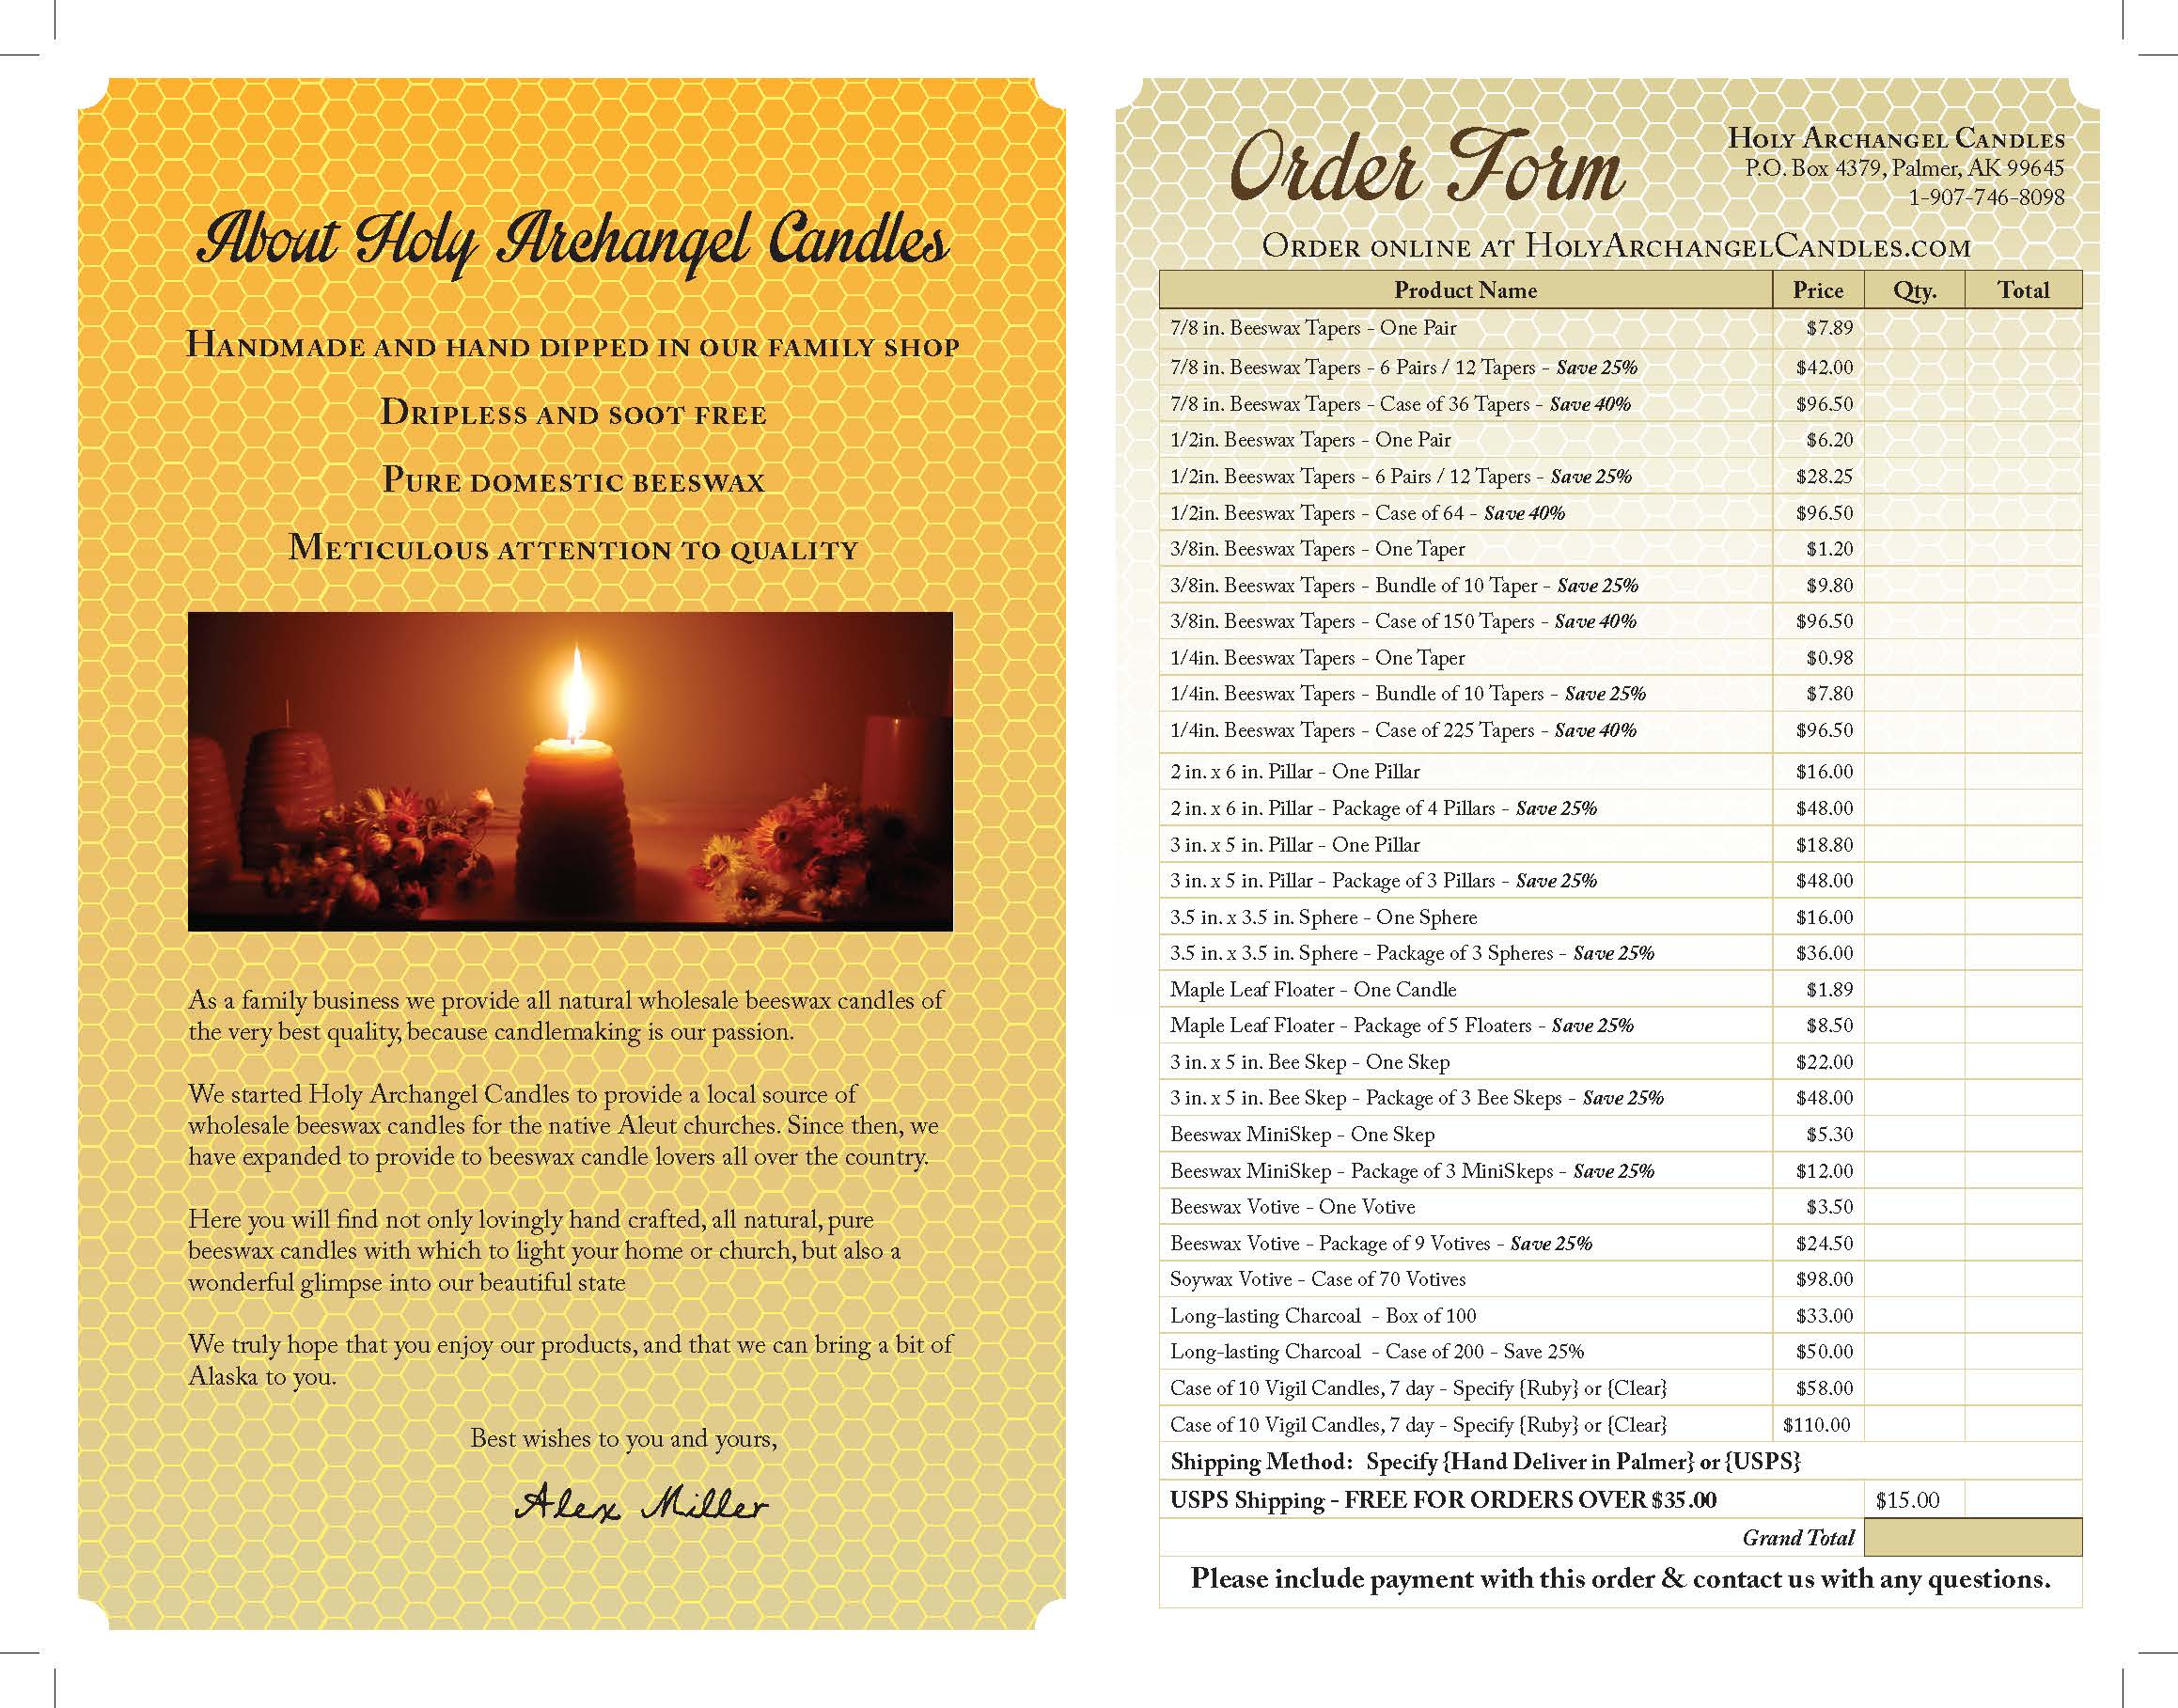 Holy Archangel Candle Company info sheet